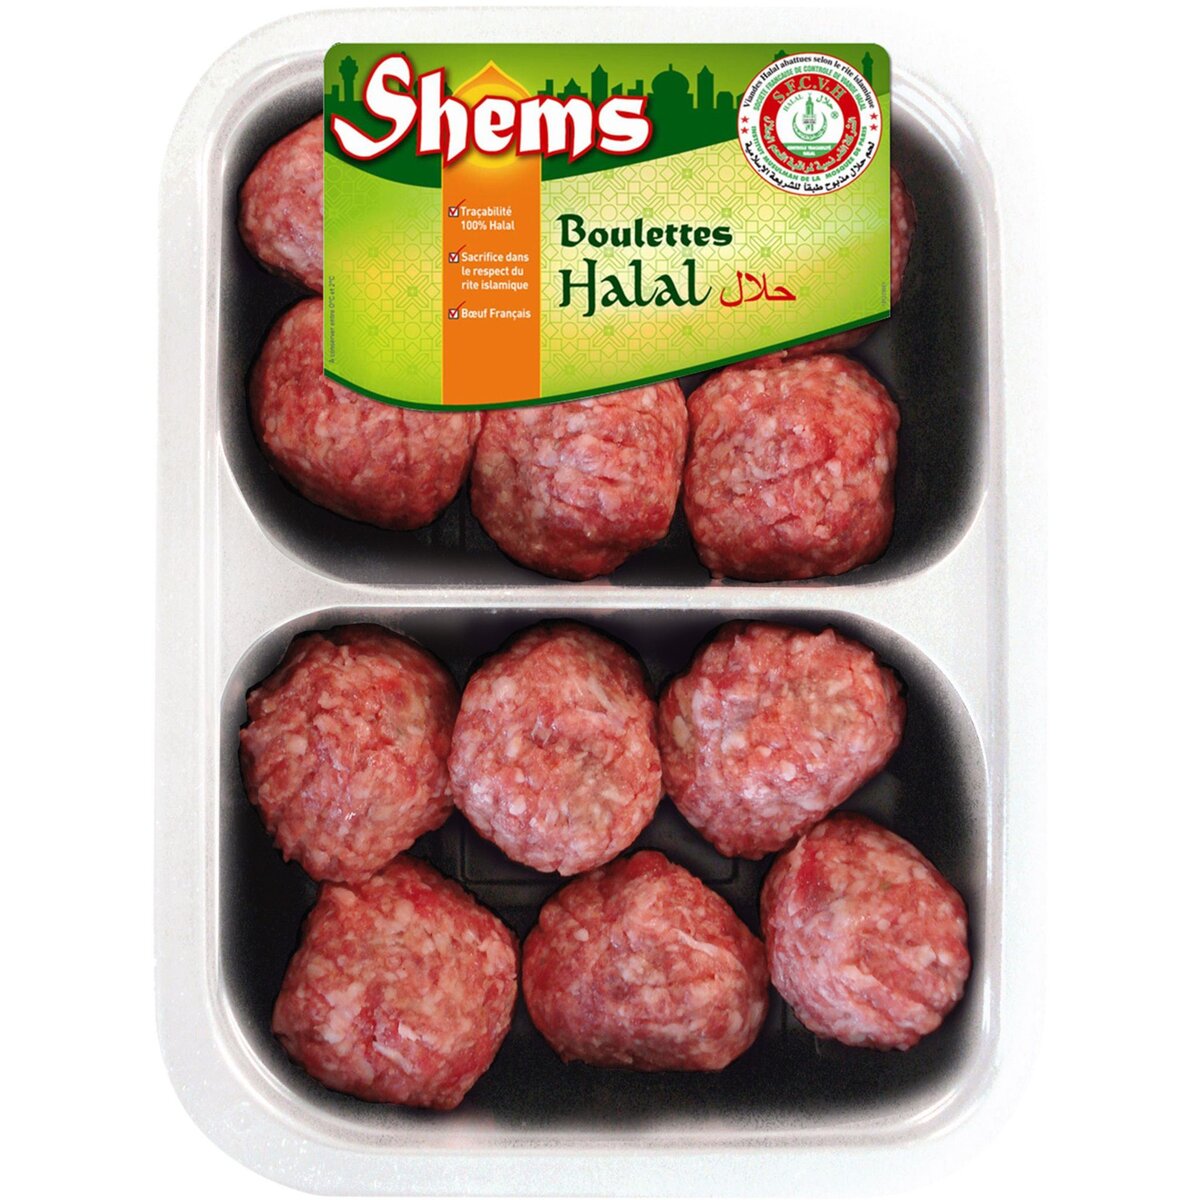 Shems boulette halal 360g